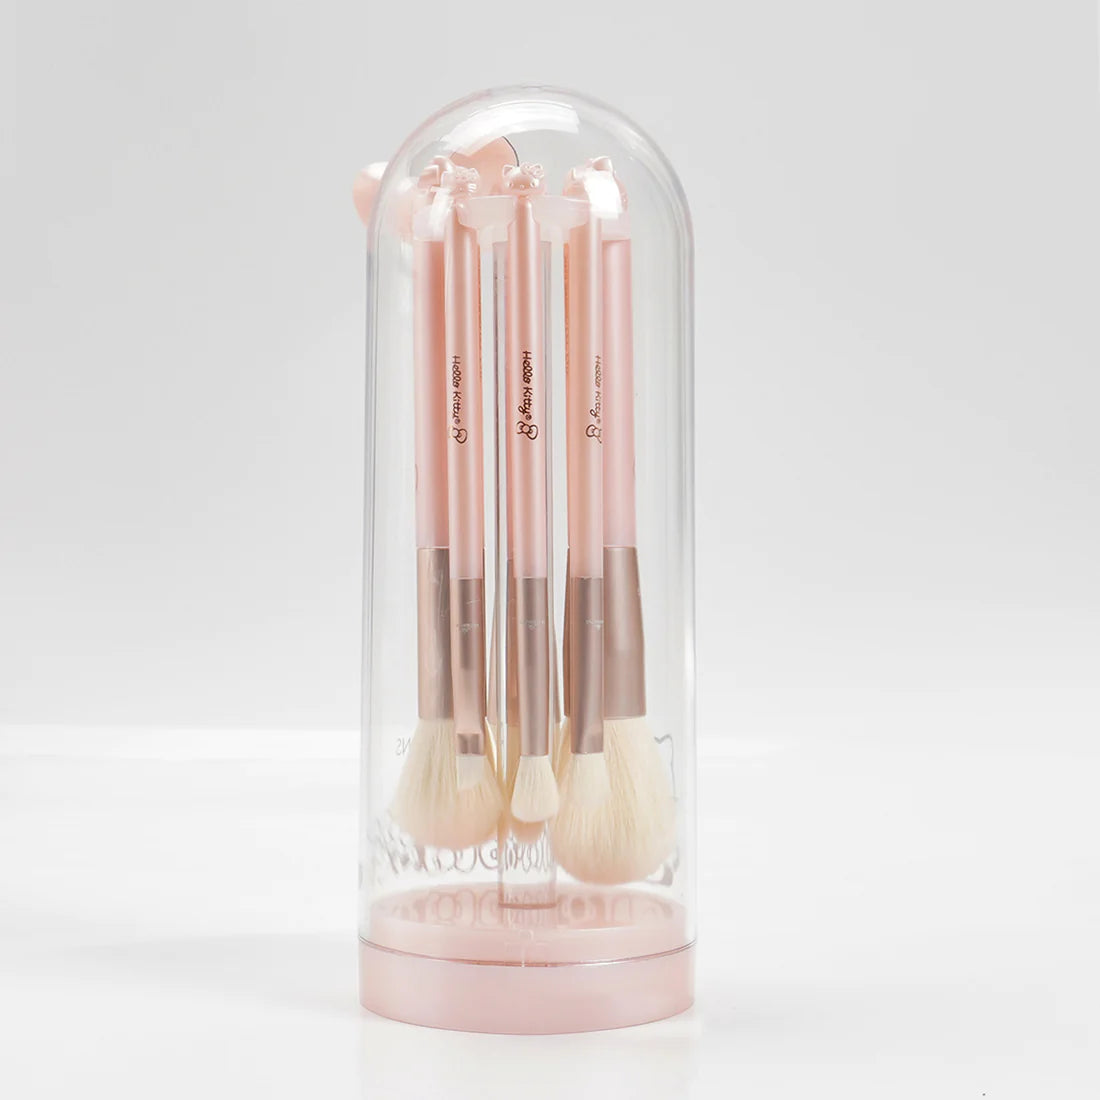 Impressions Vanity - Hello Kitty Kawaii Icon Bell Jar 6pc Brush Gift Set Pink